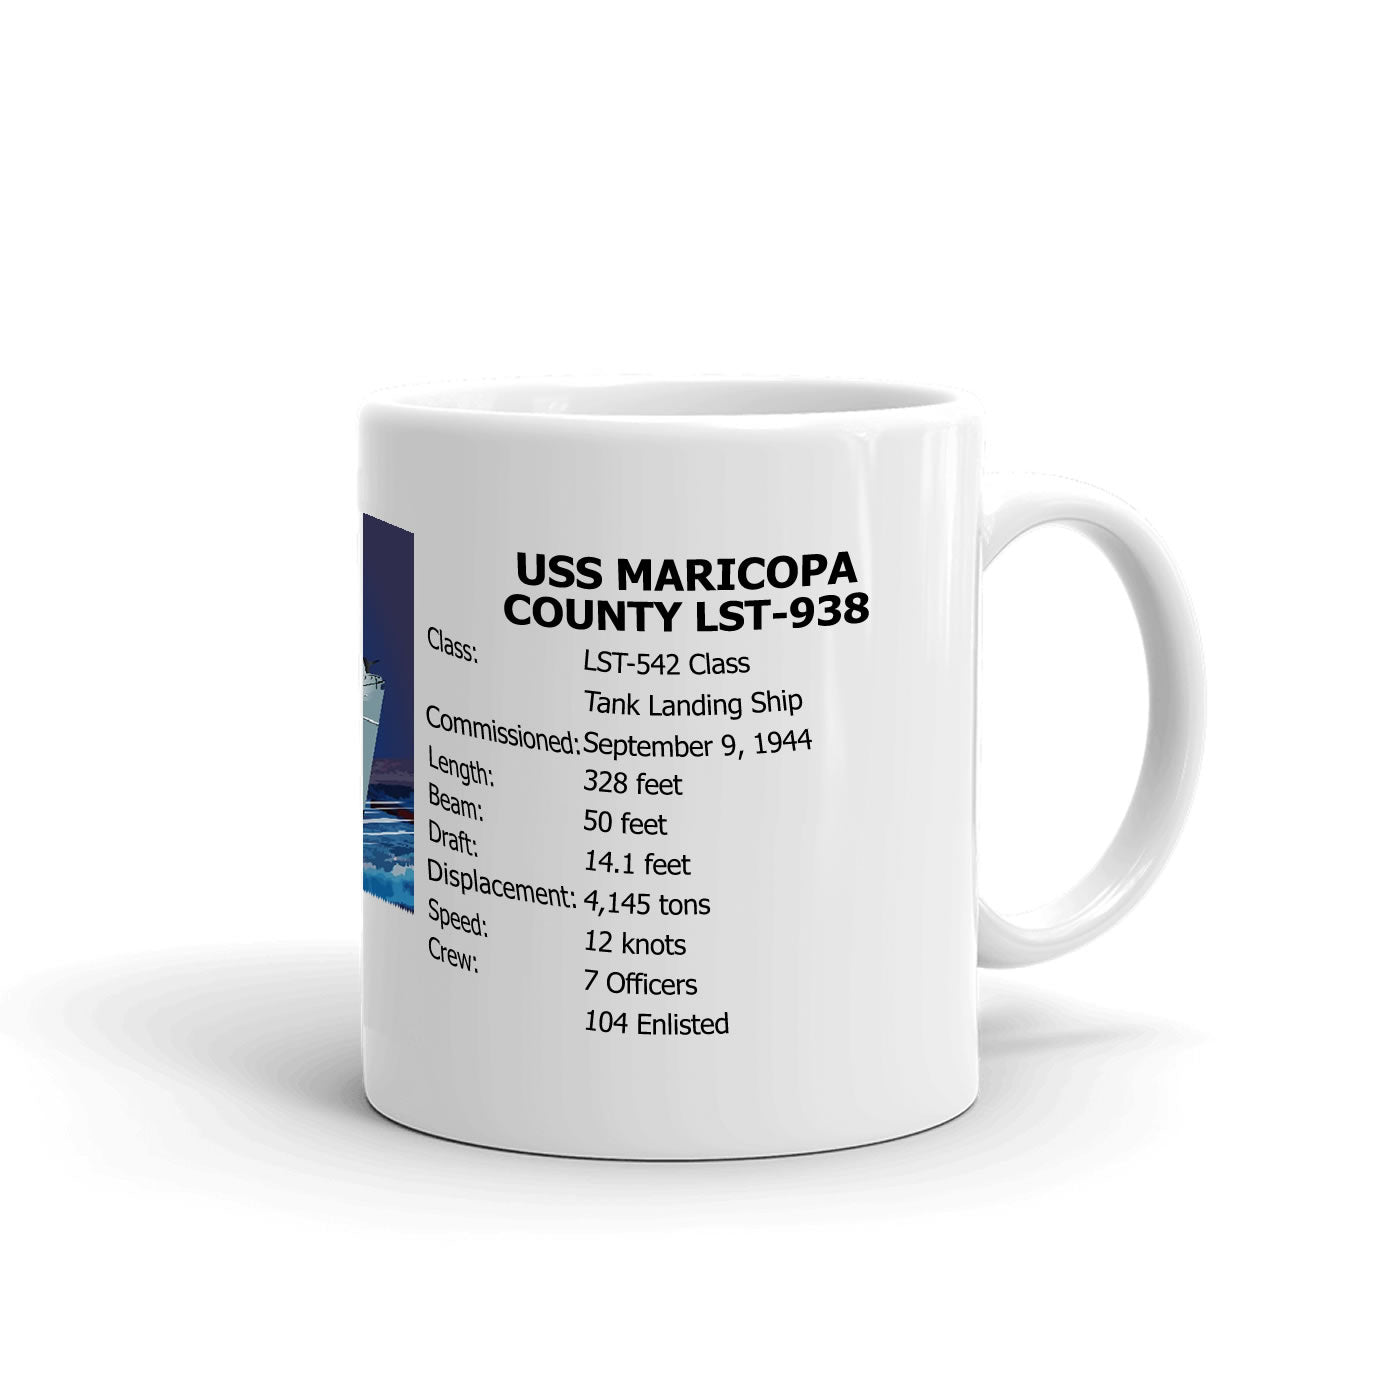 USS Maricopa County LST-938 Coffee Cup Mug Right Handle